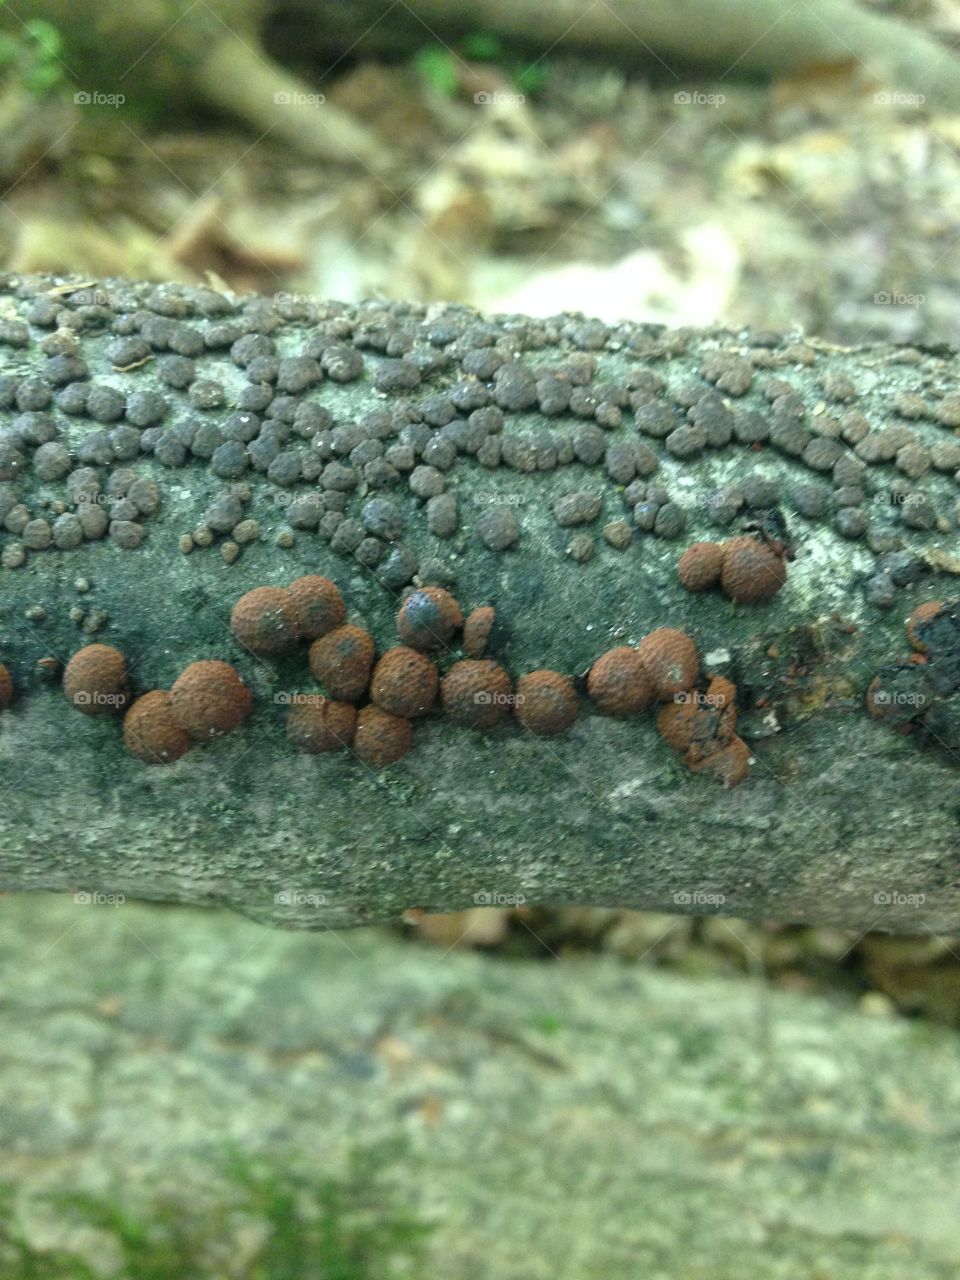 The beautiful fungus among us